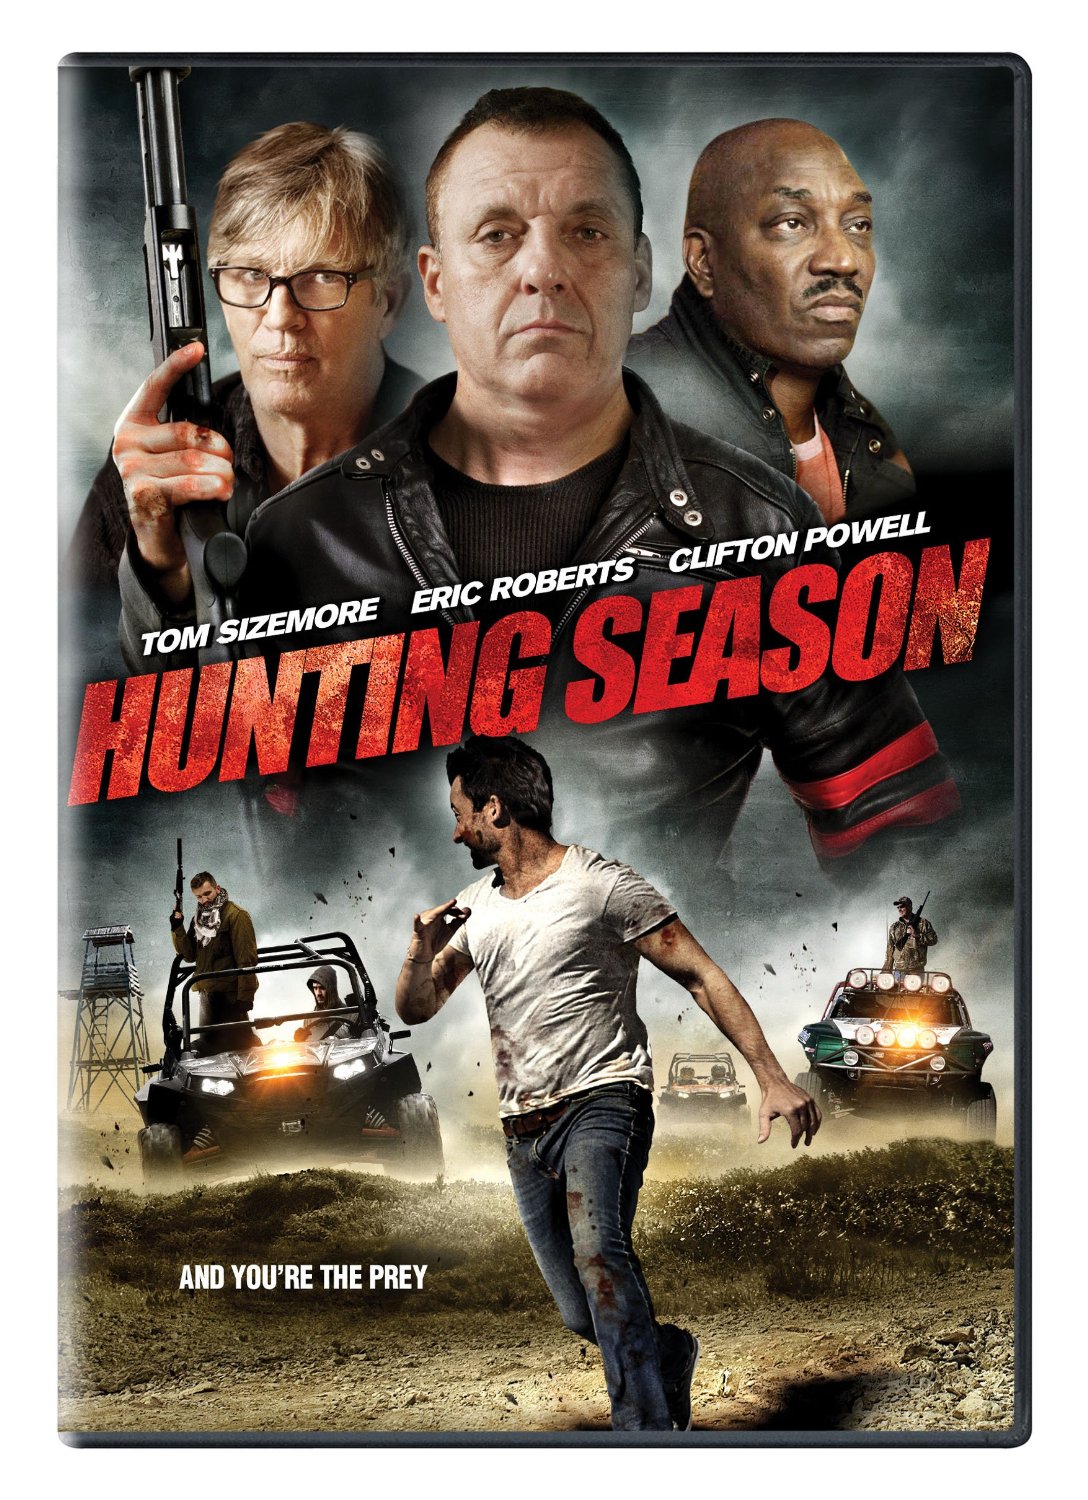 Nonton film Hunting Season layarkaca21 indoxx1 ganool online streaming terbaru